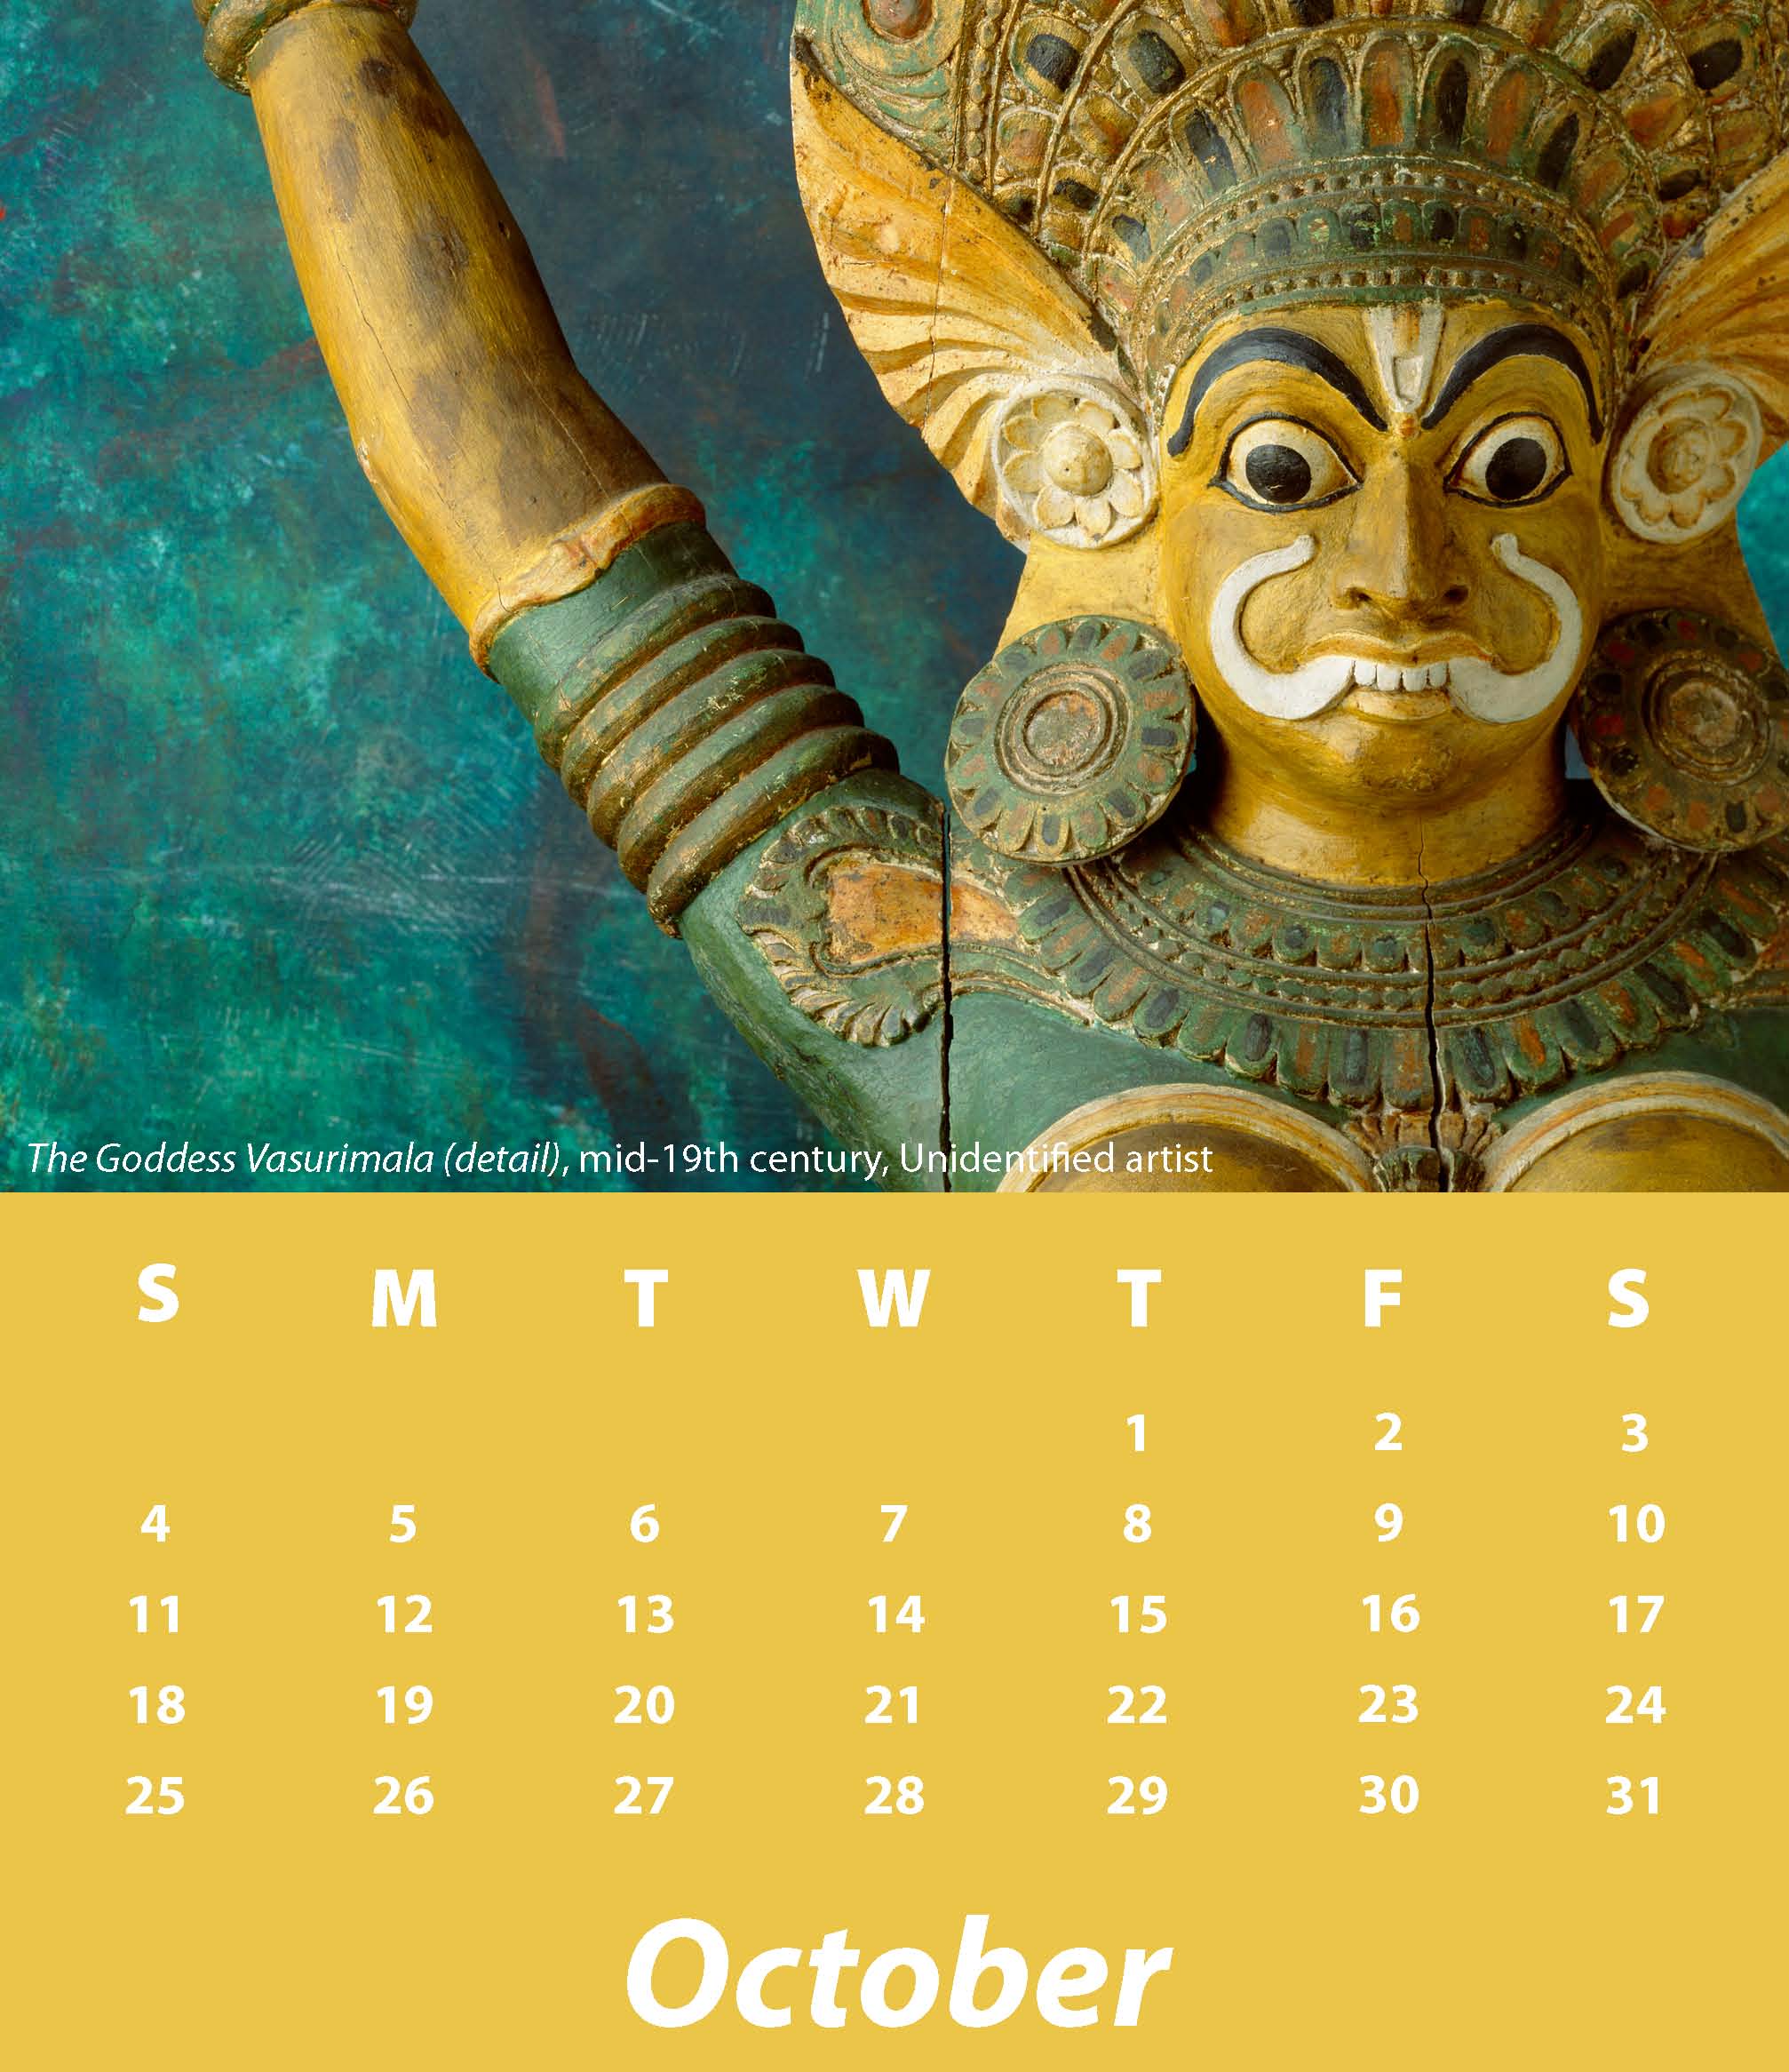 an October calendar with the image The Goddess Vasurimala